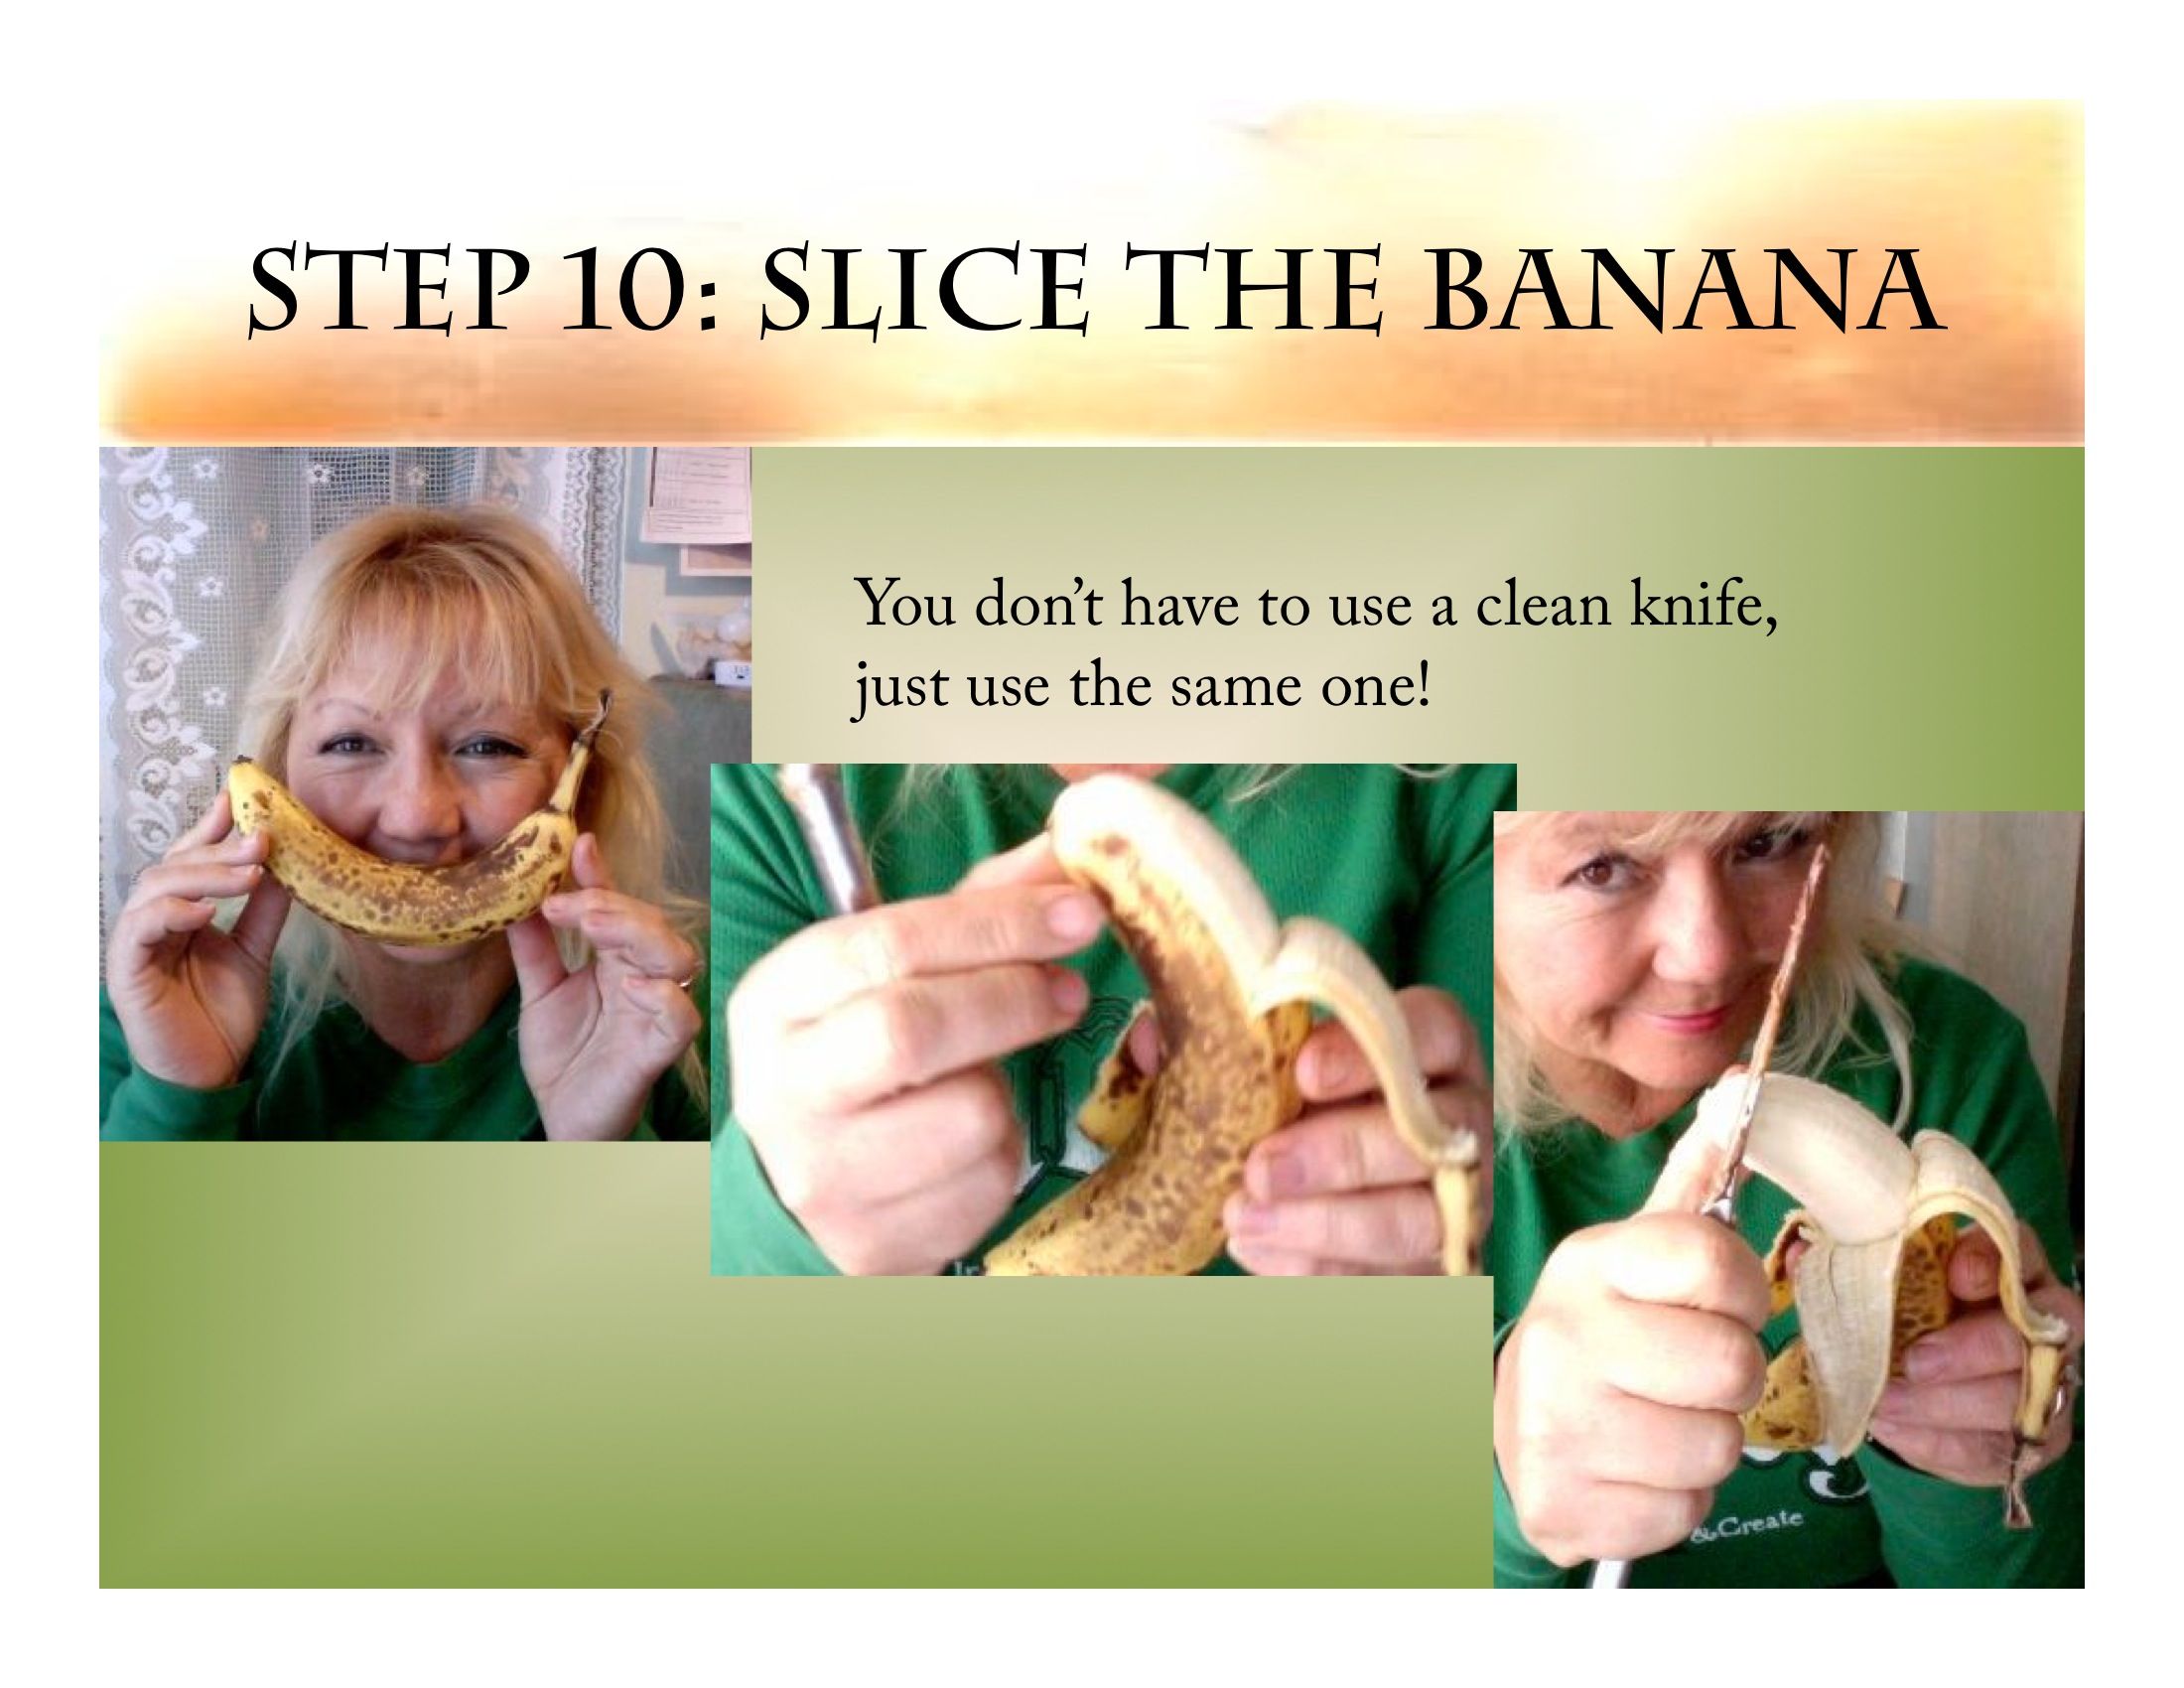 Step 10: Slice the Banana